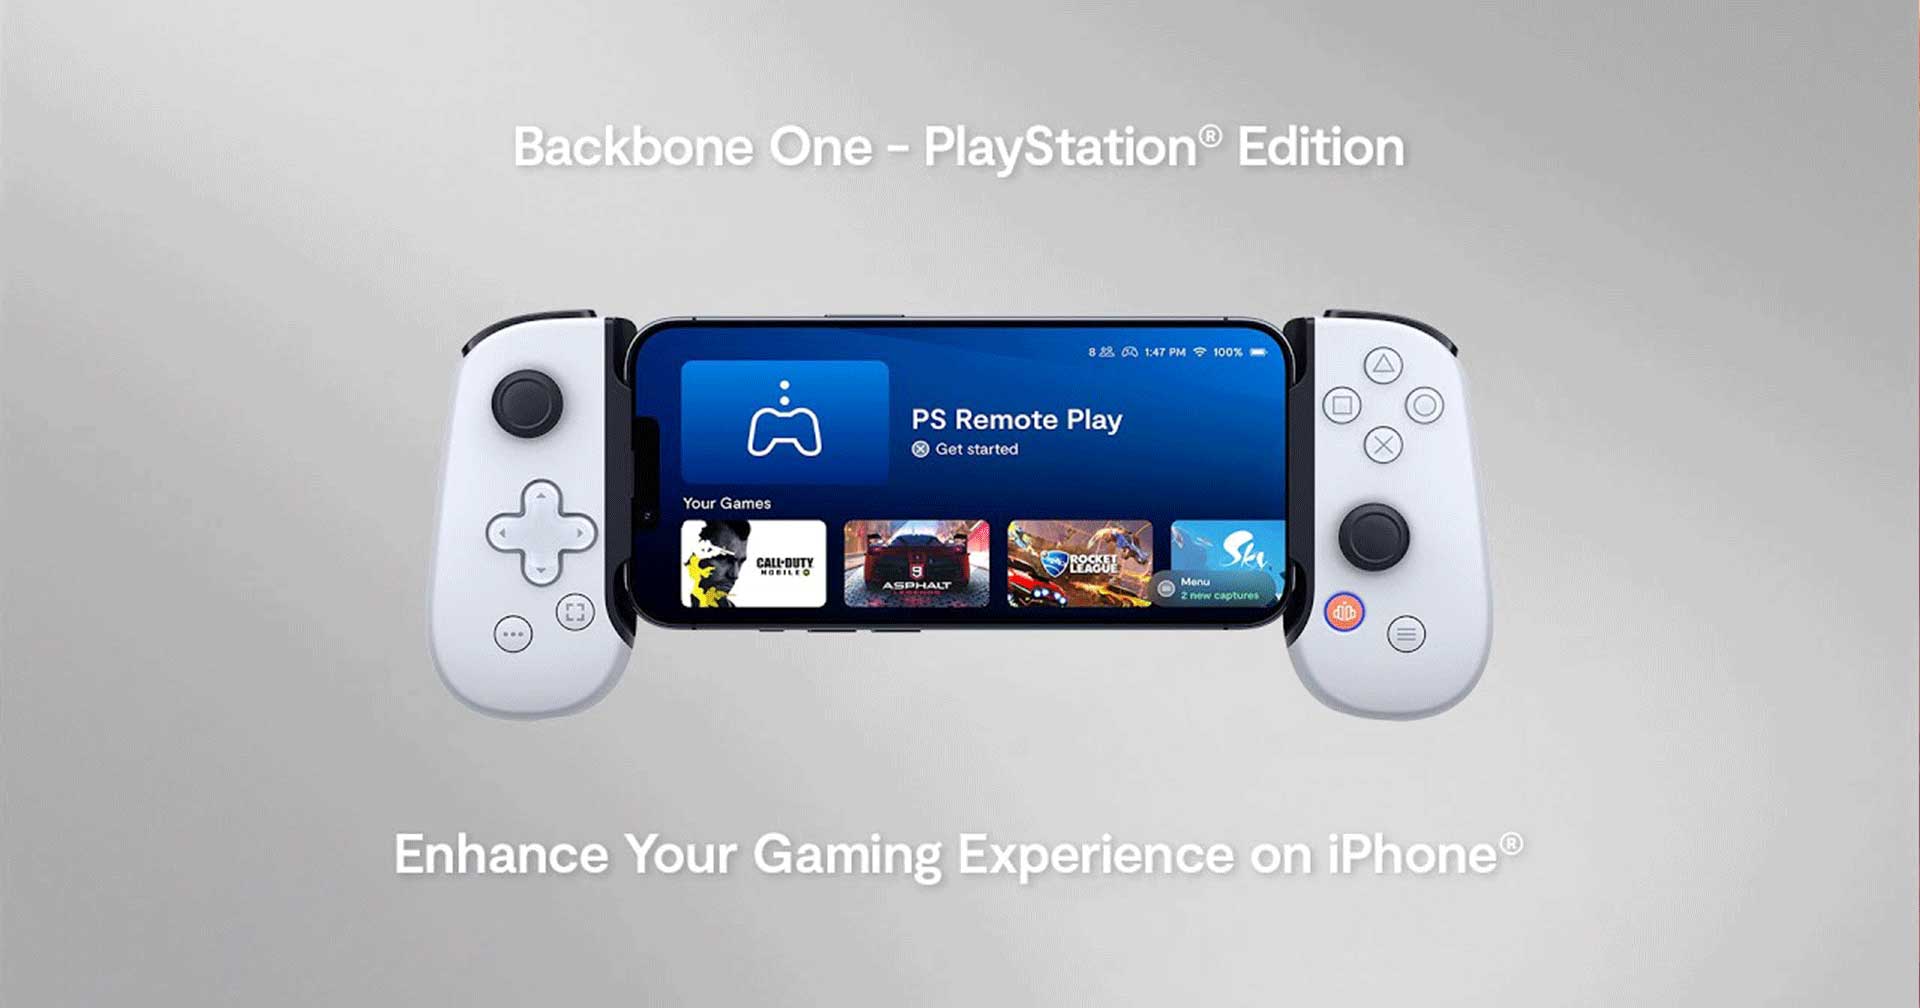 PlayStation ประกาศเปิดตัวจอยสำหรับ iPhone กับ Backbone One – PlayStation Edition